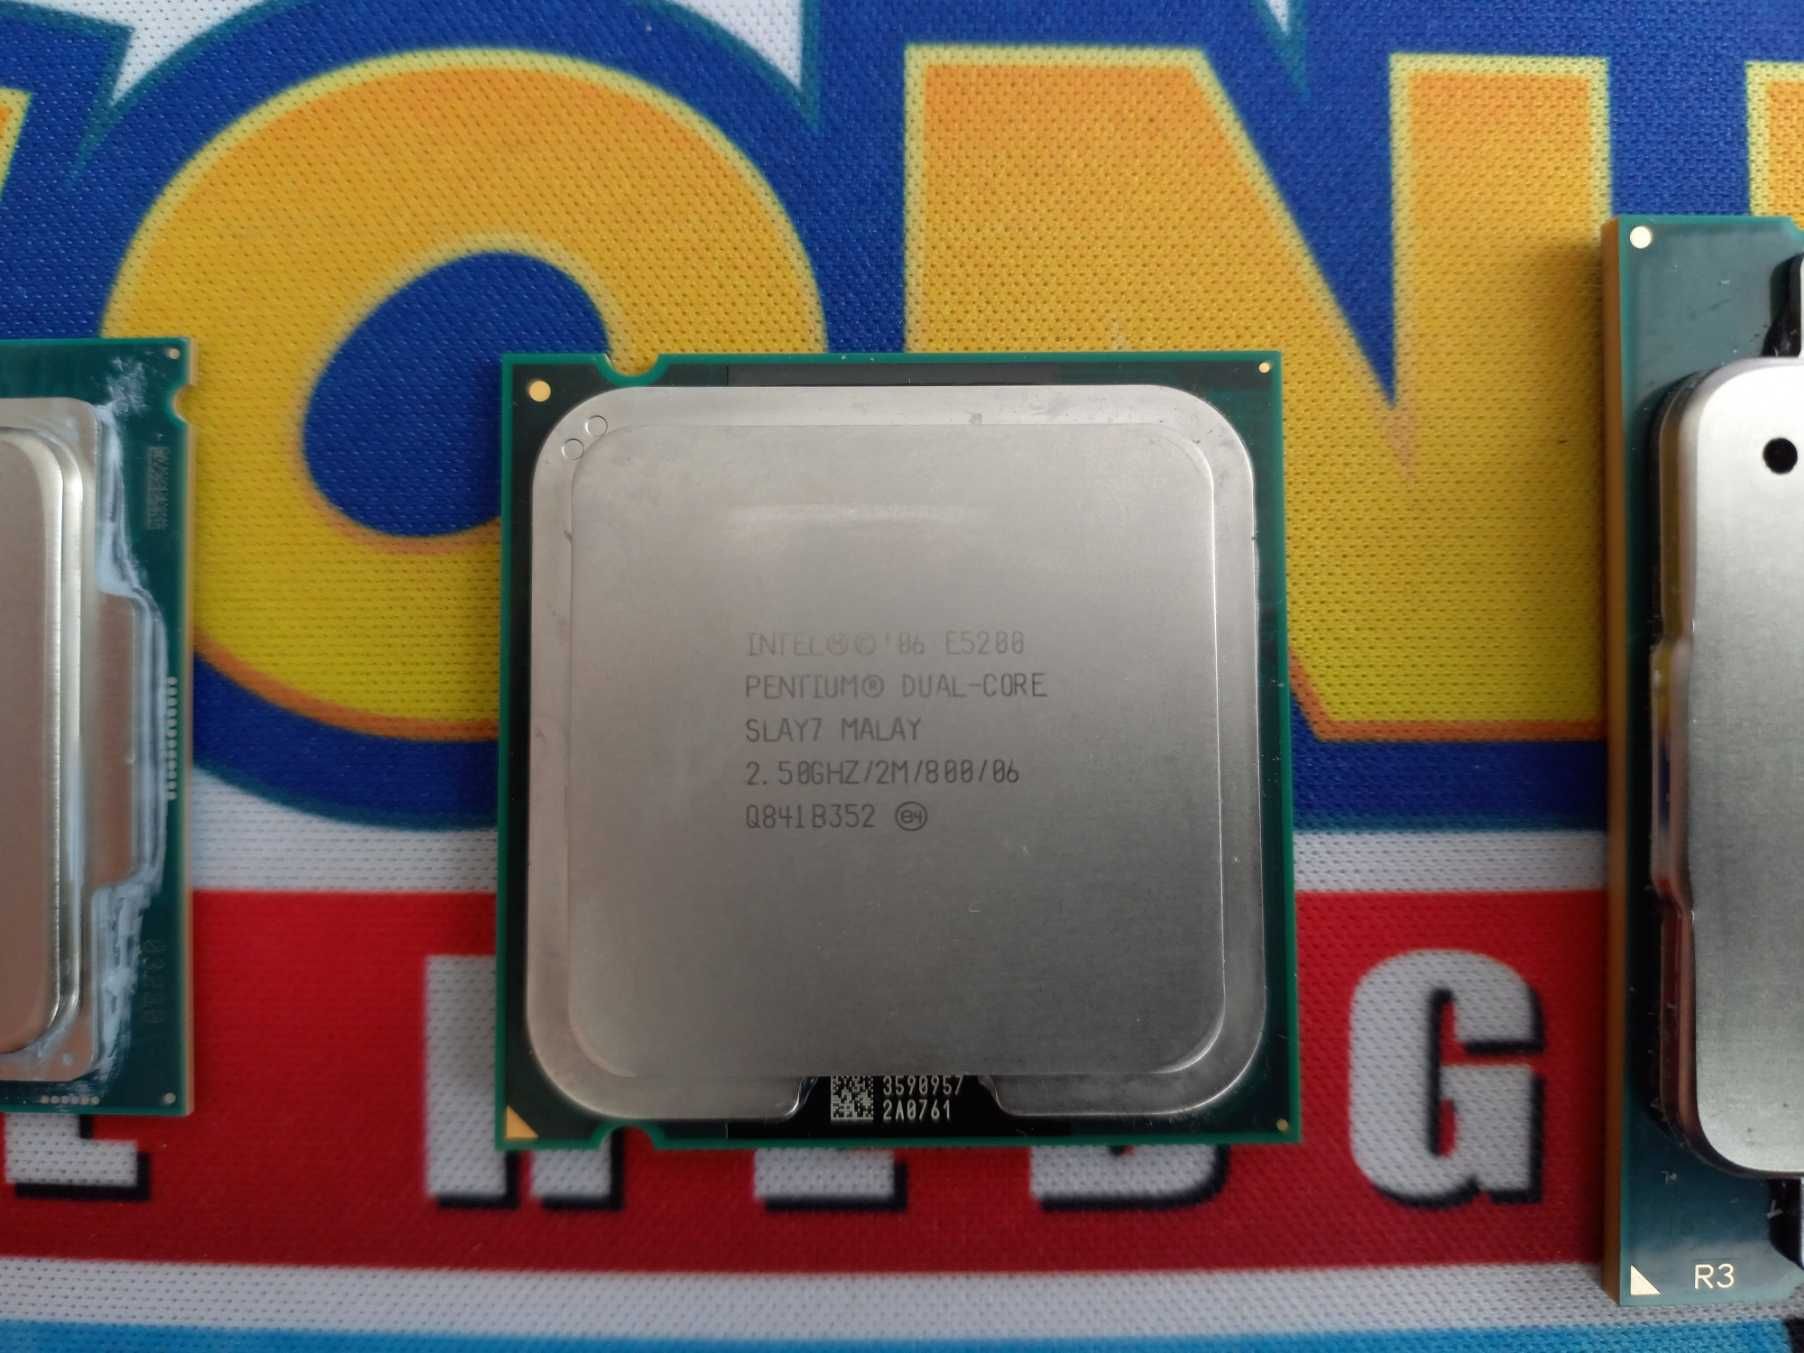 cpu Xeon E5-2620 V3 + i3-6100 + Pentium E5200